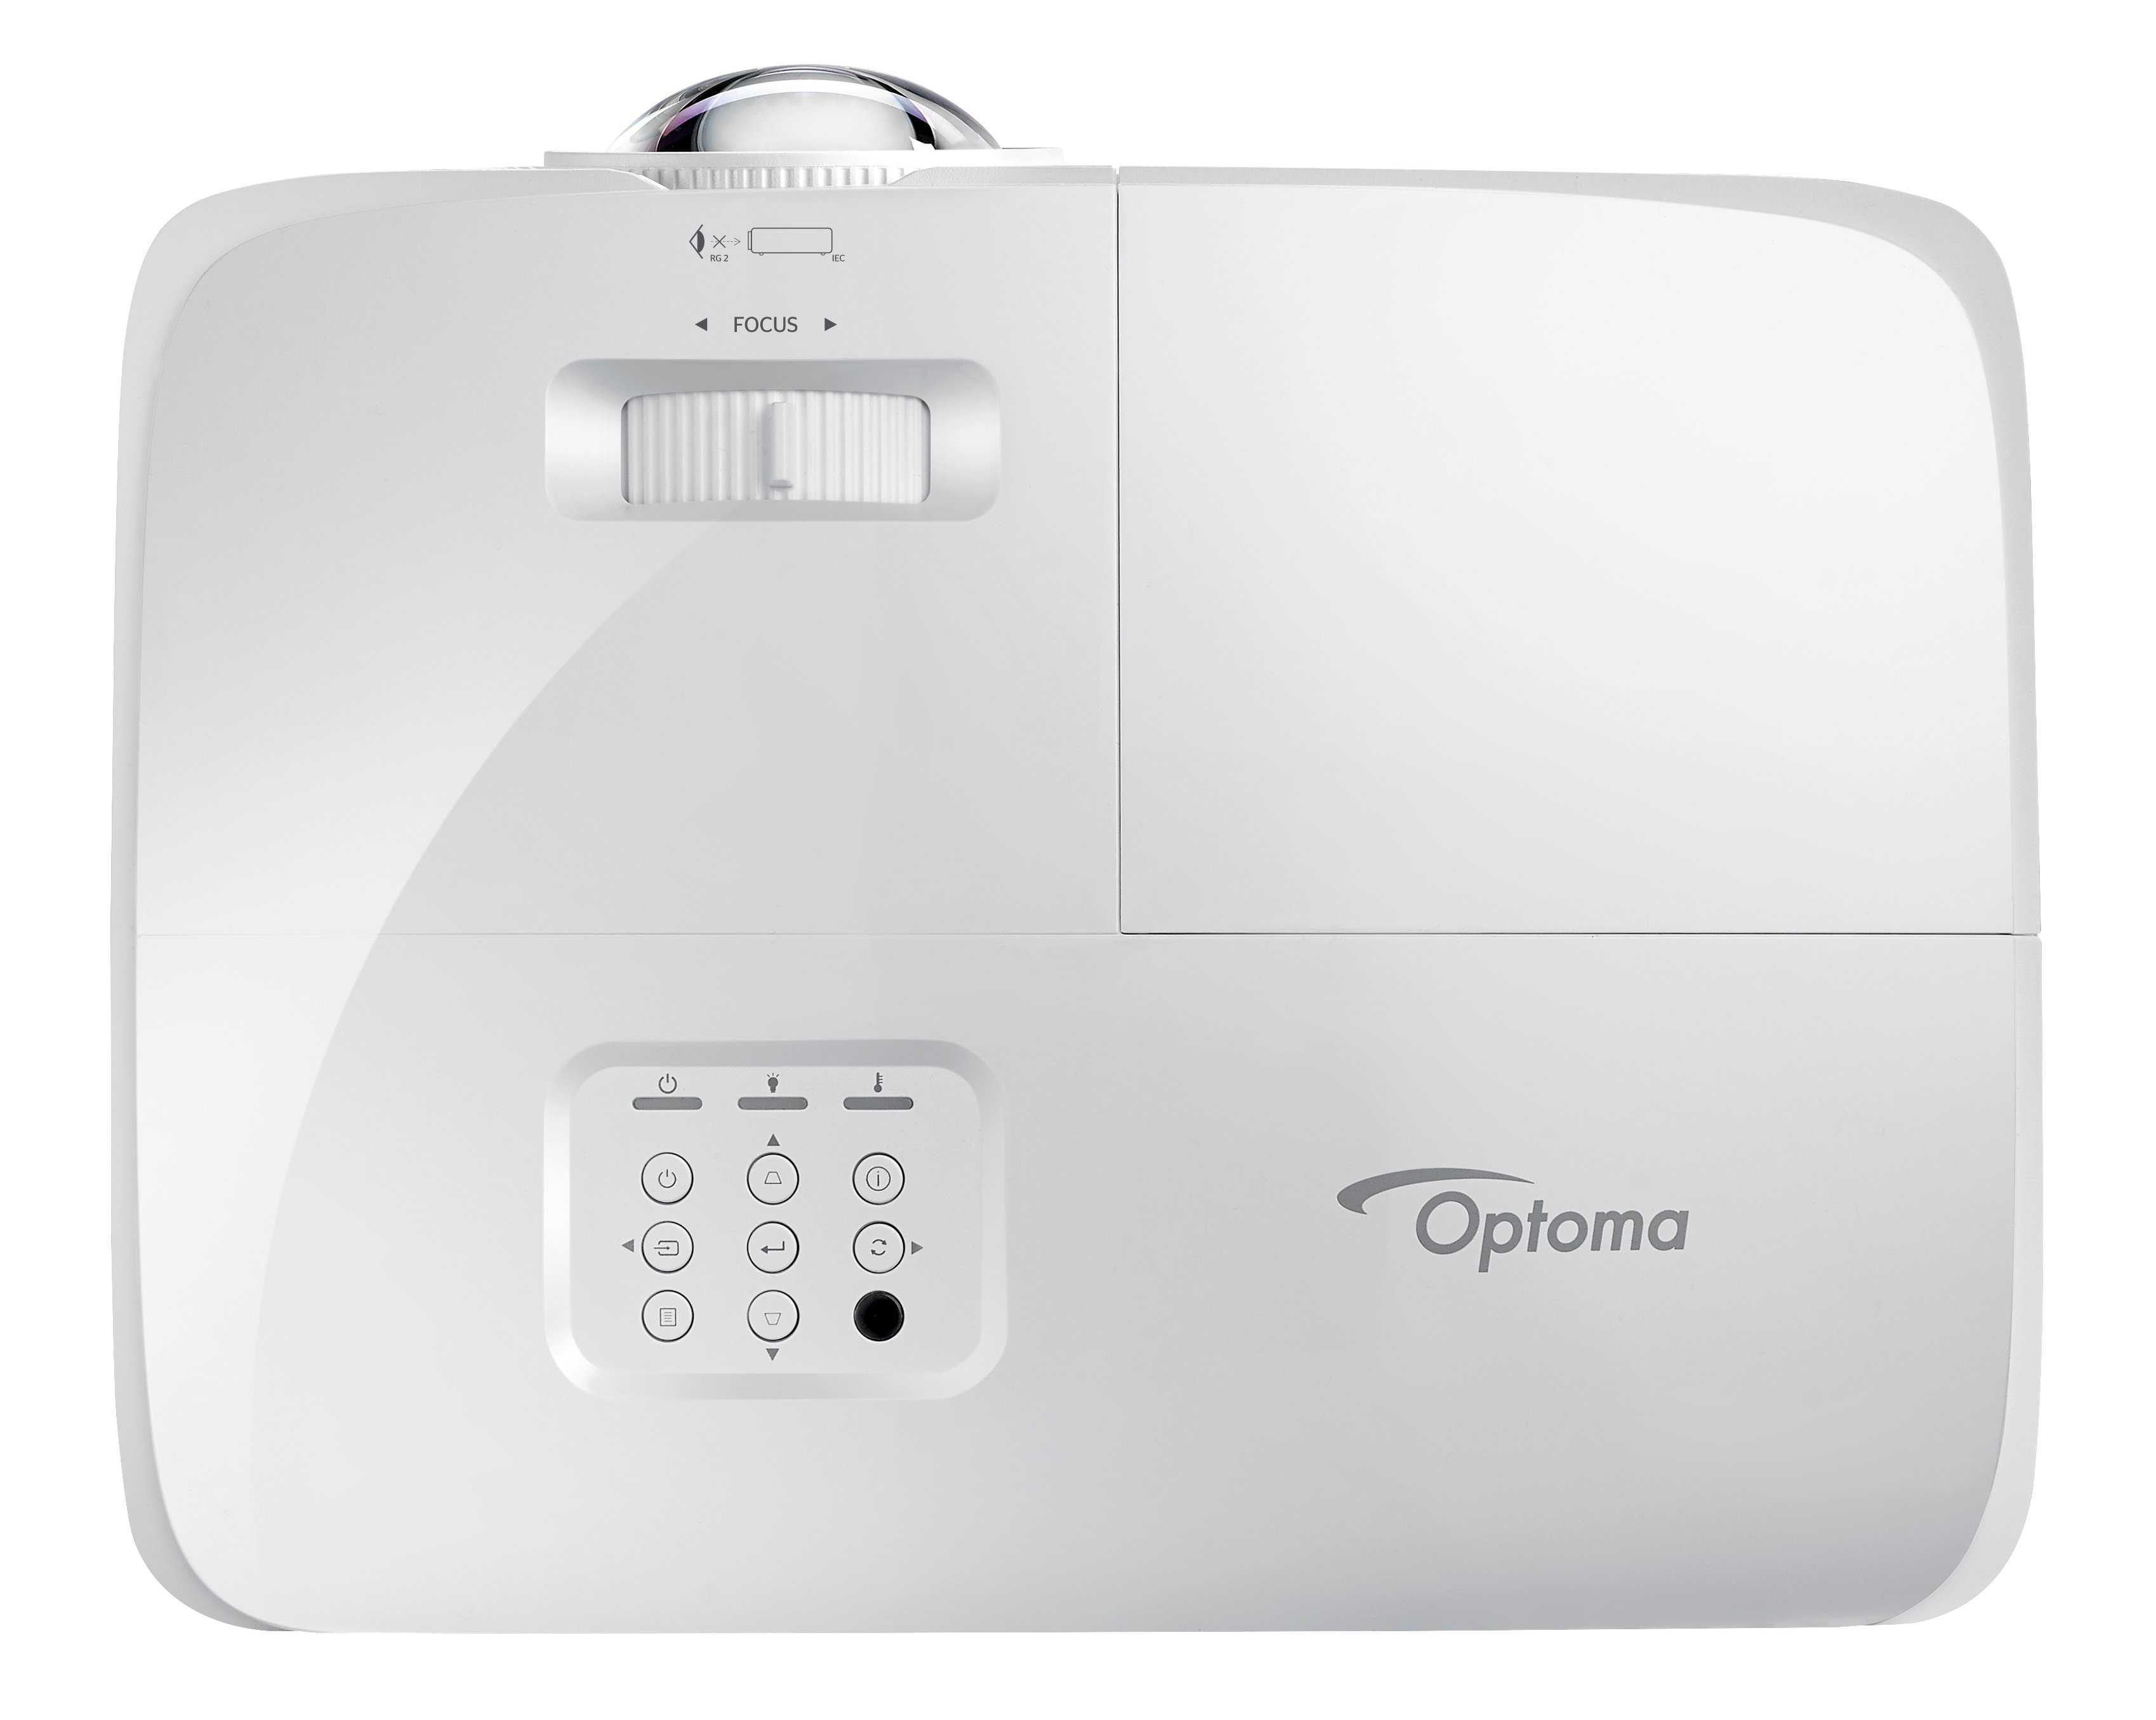 Optoma 奧圖碼 GT1080HDR Full-HD ST短焦 3D 支援4K 劇院級 短焦 投影機 | 金曲音響